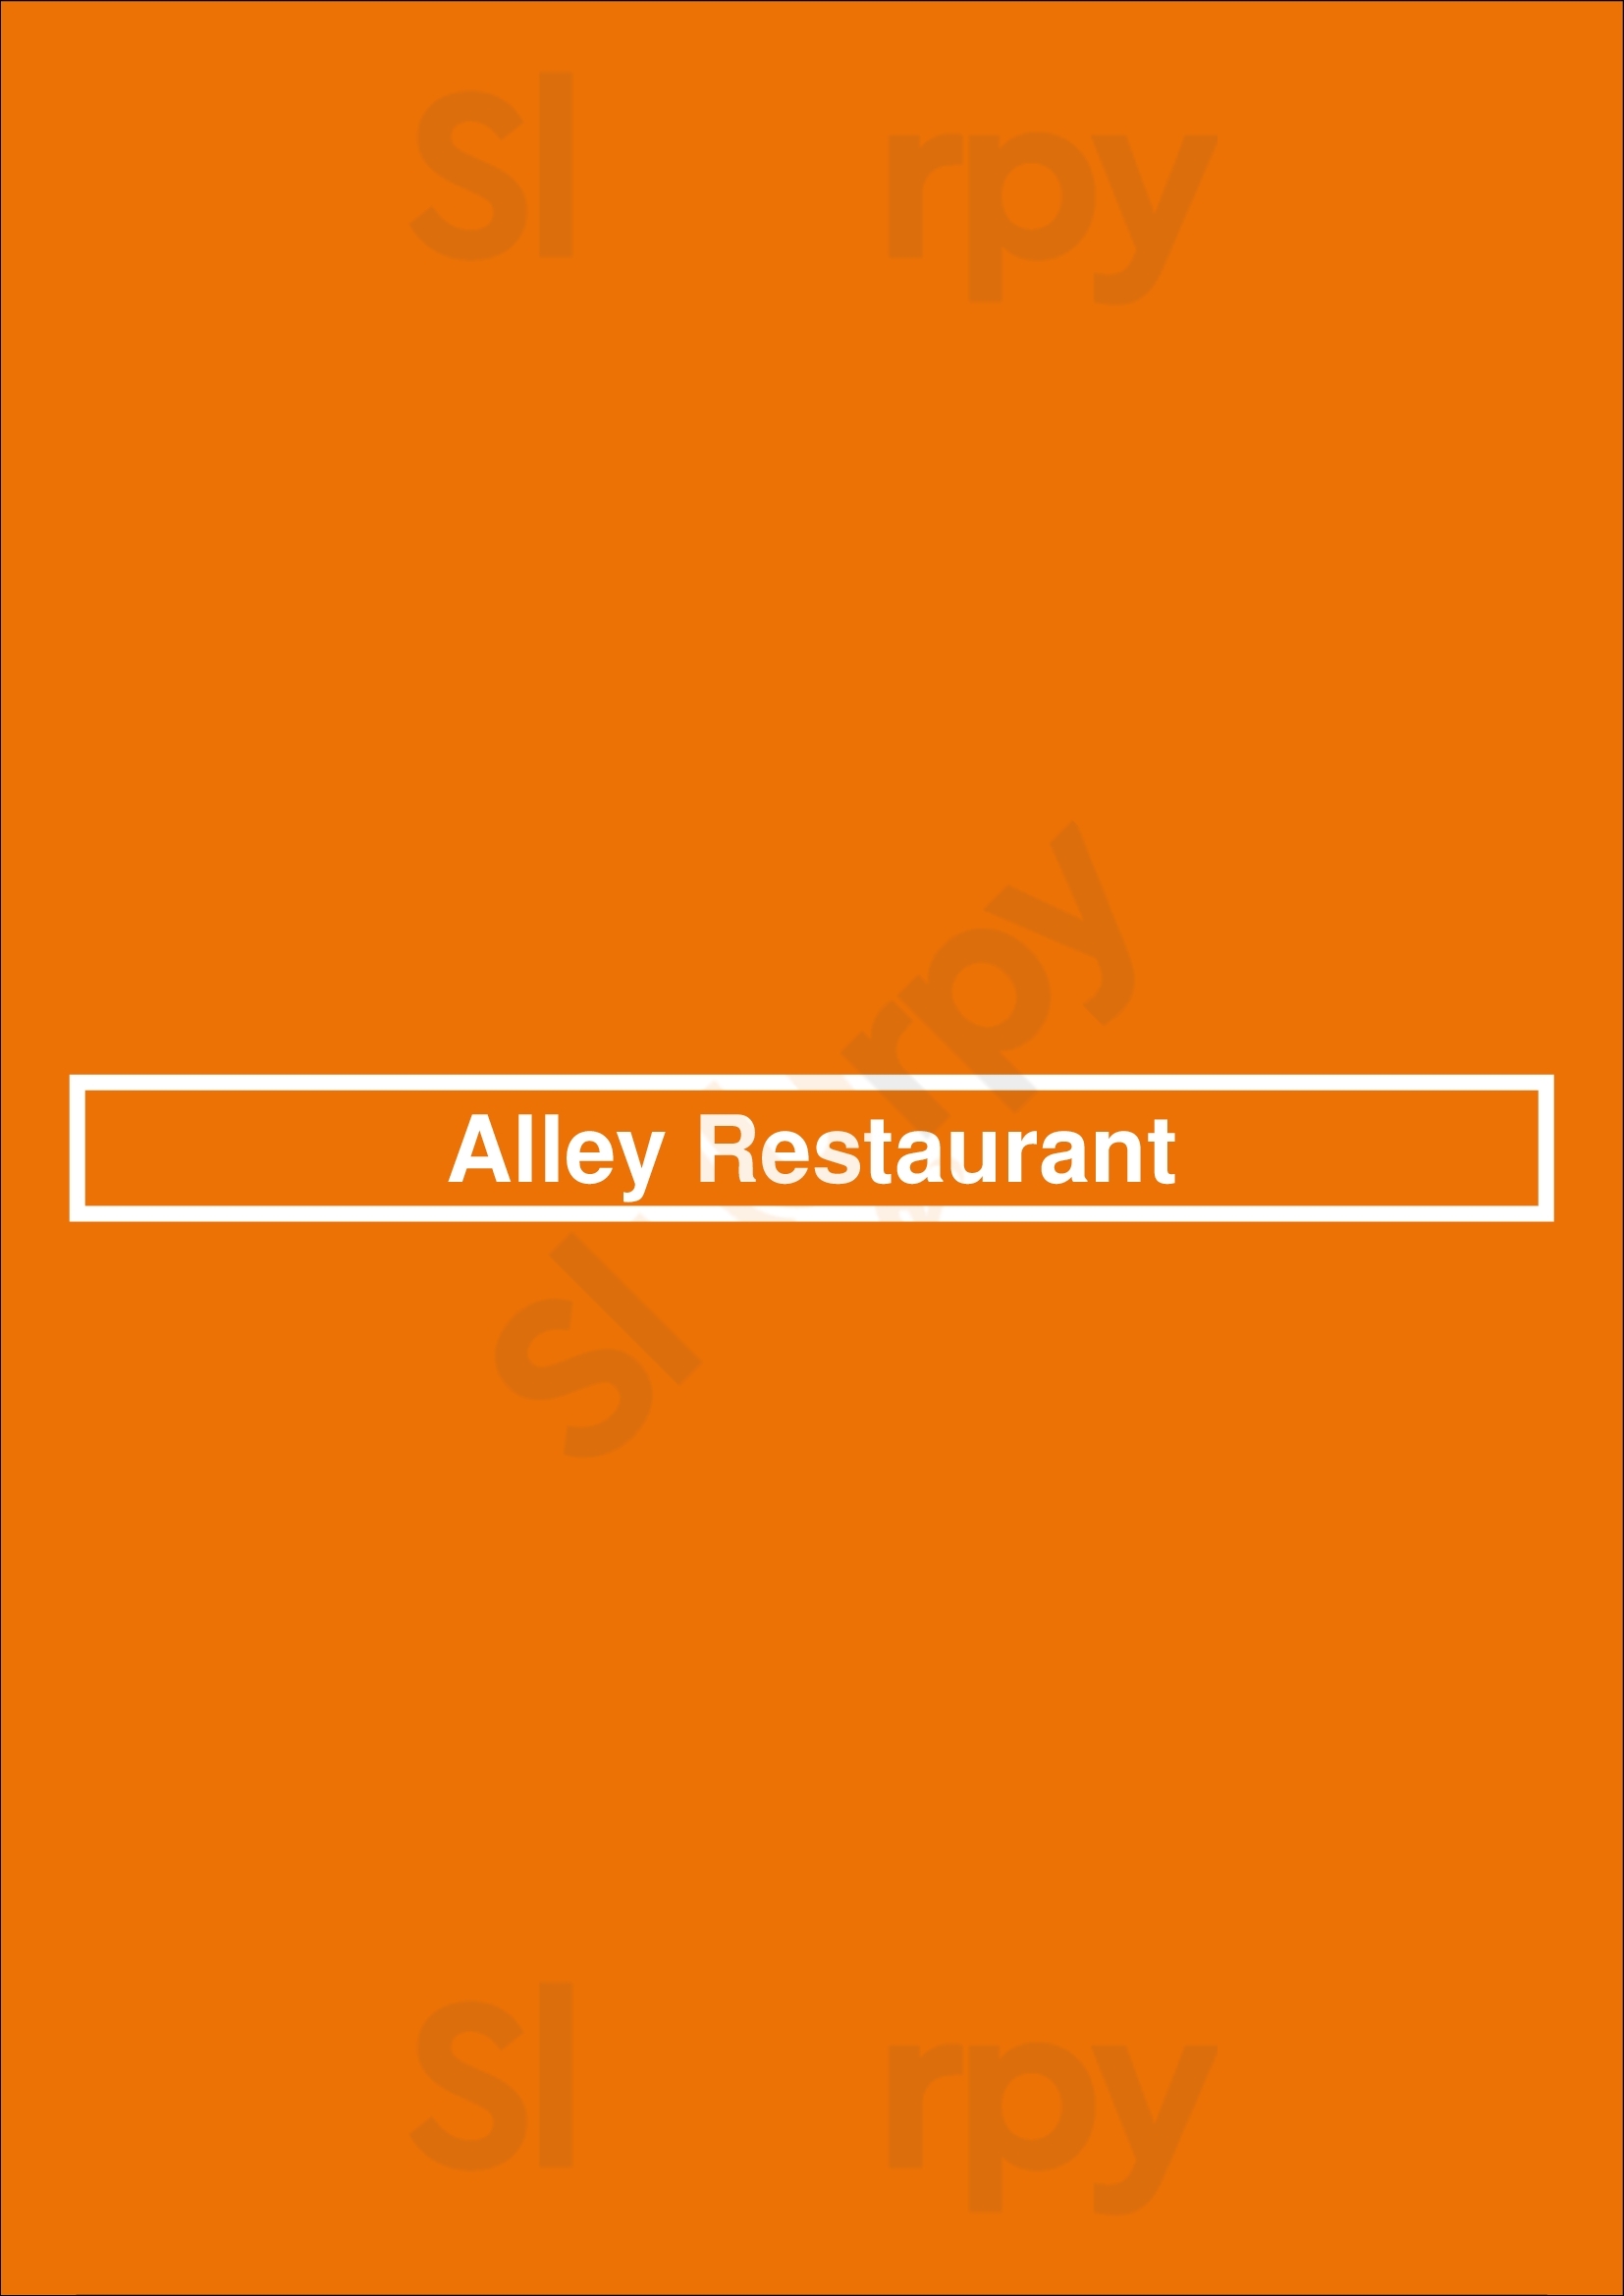 Alley Restaurant London Menu - 1